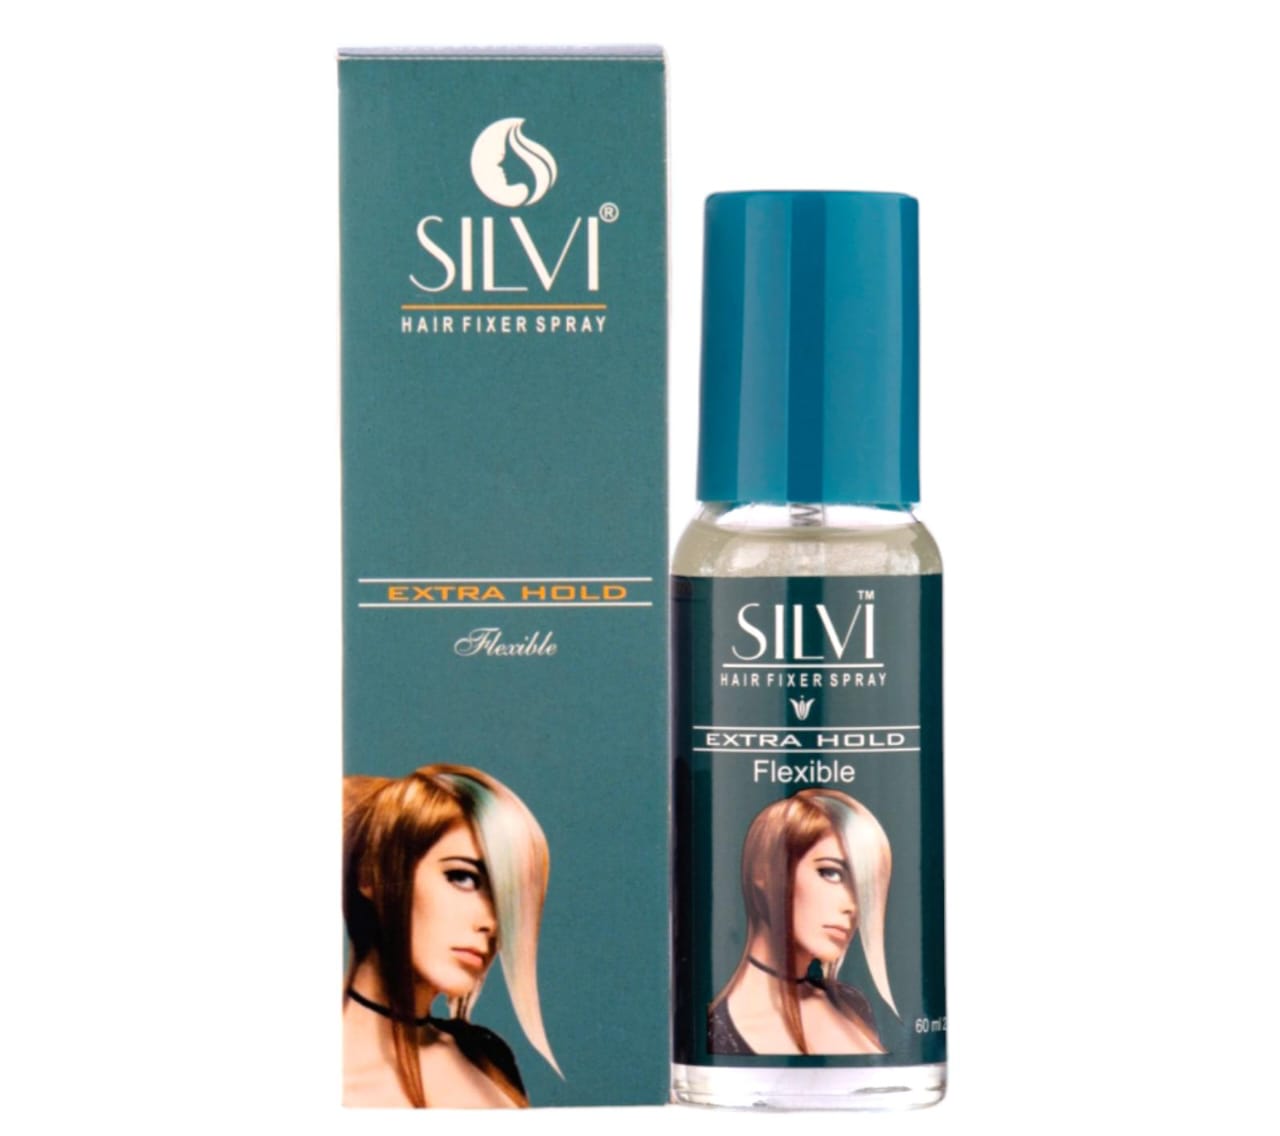 silvi hair fixer spray